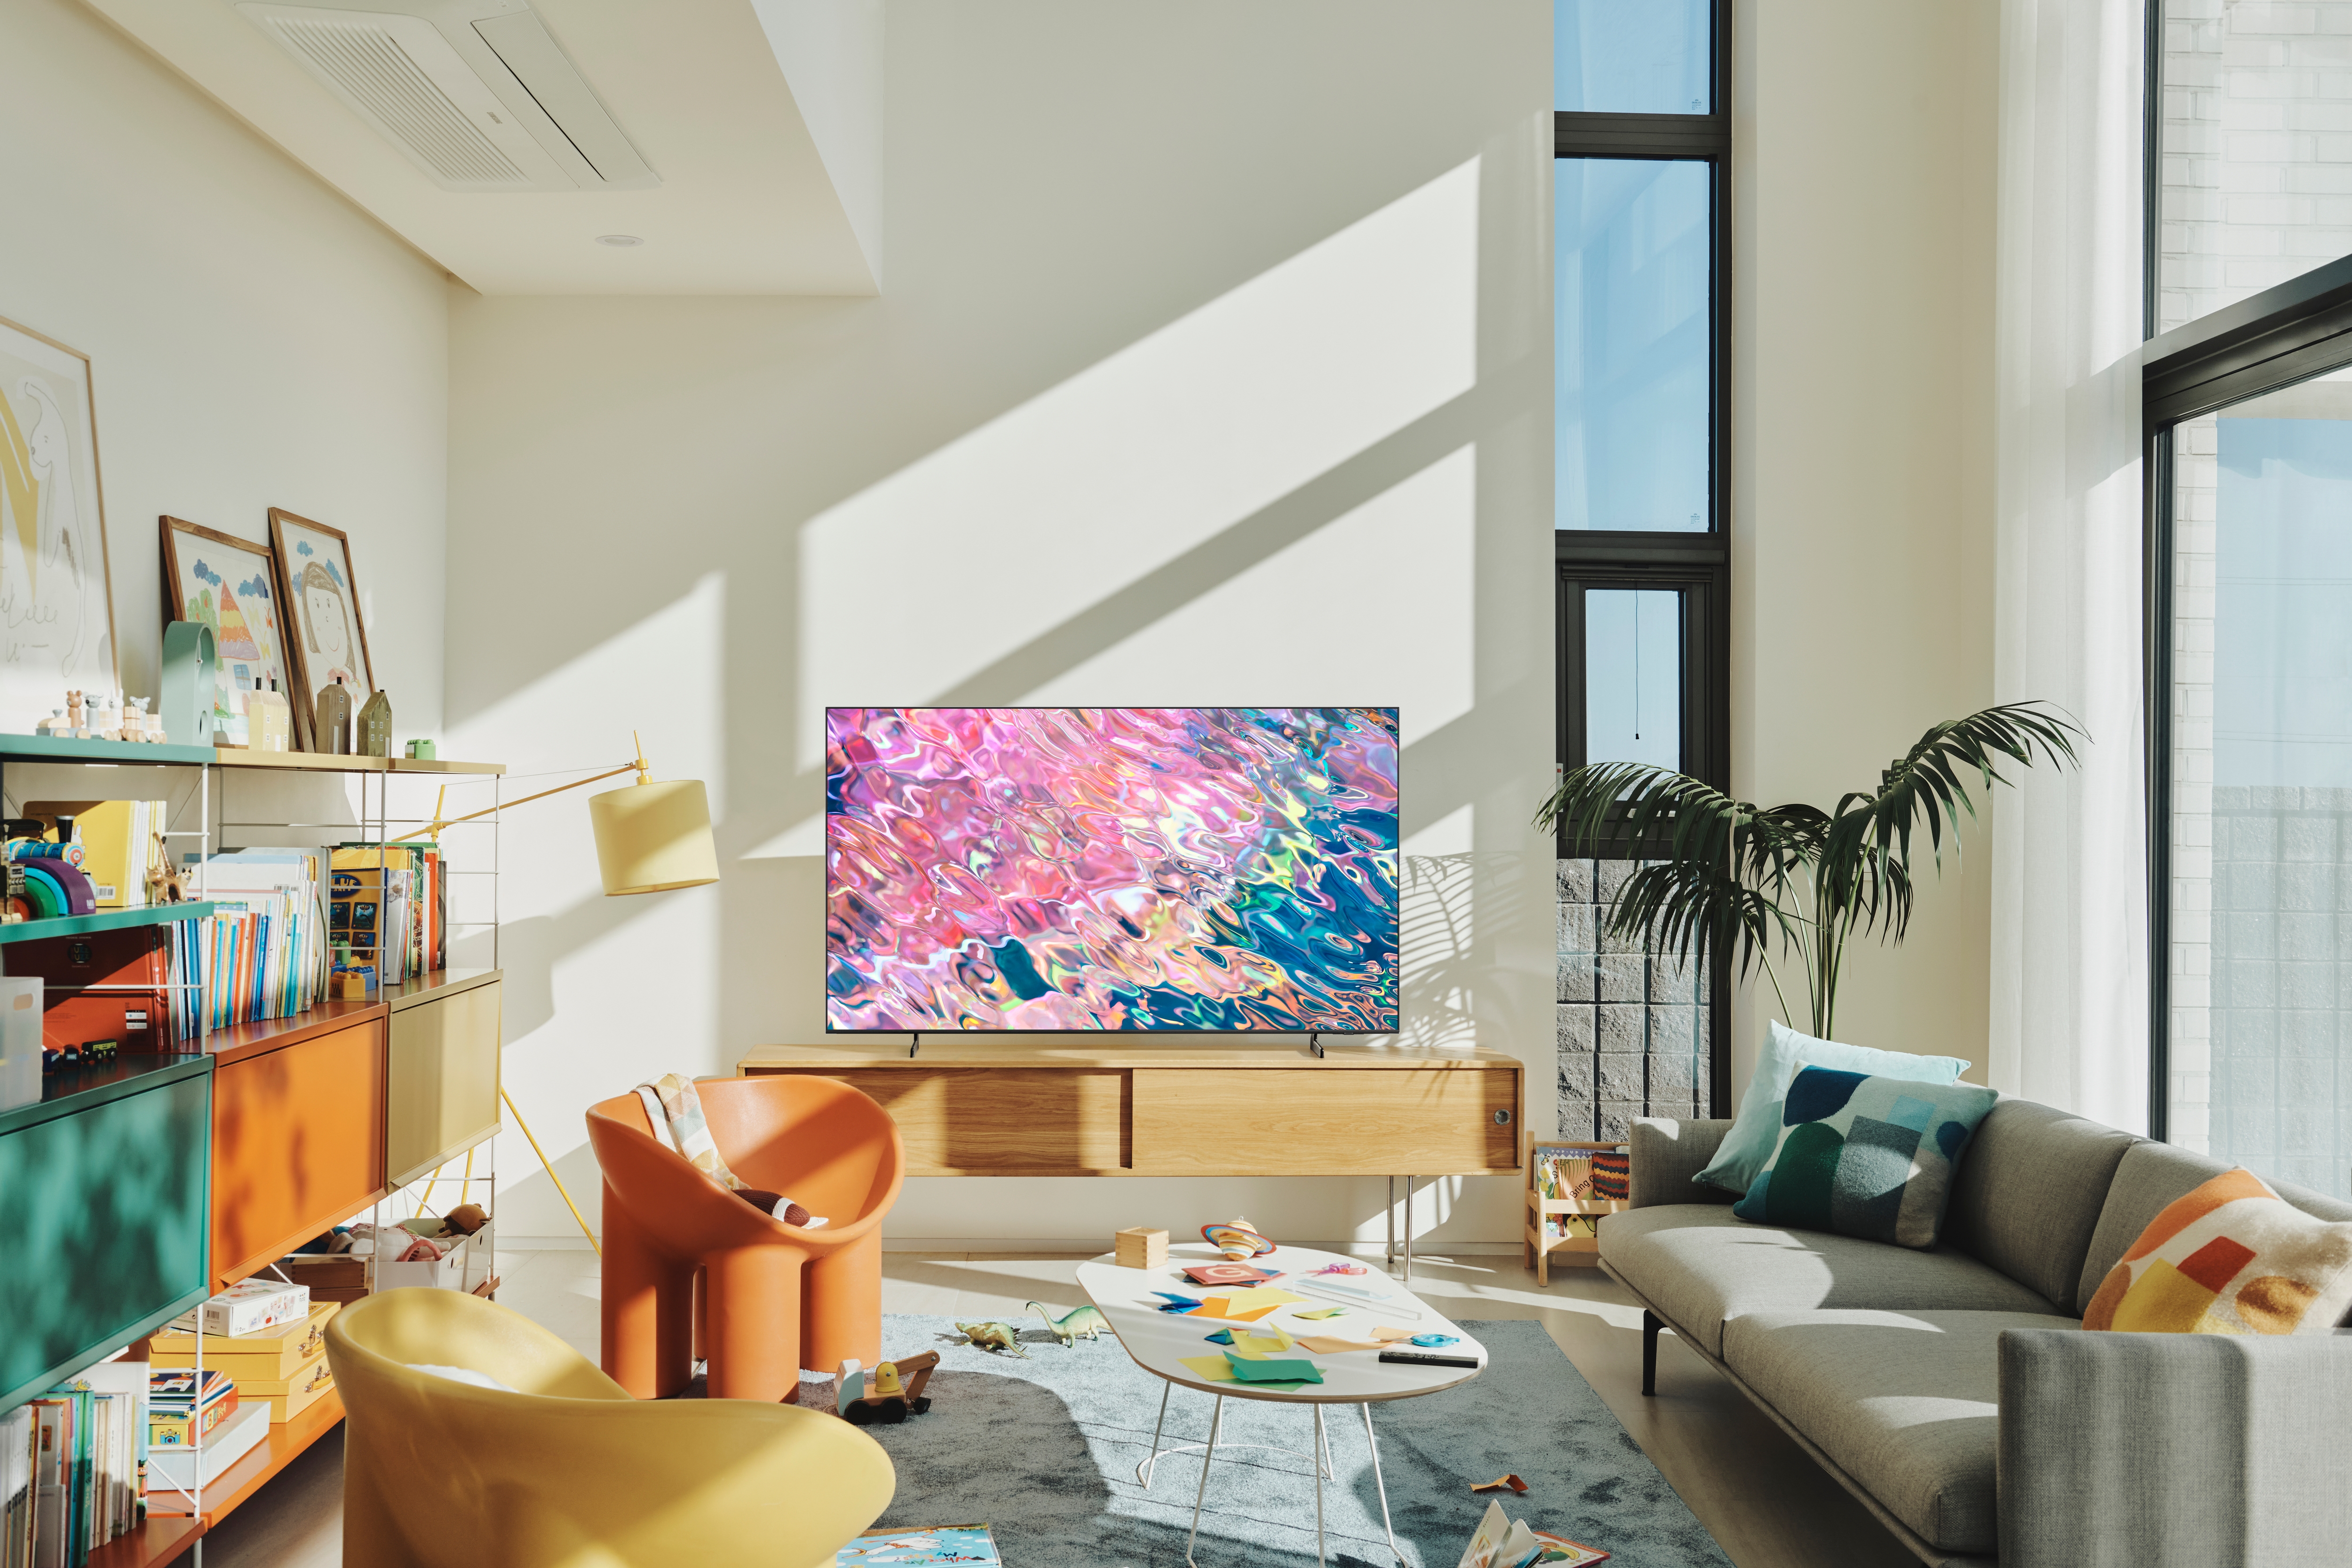 SAMSUNG - Smart TV Class QLED 4K de 43 pulgadas de la serie Q60B, Dual LED  Quantum HDR, con Alexa incorporado (QN43Q60BAFXZA, modelo de 2022)